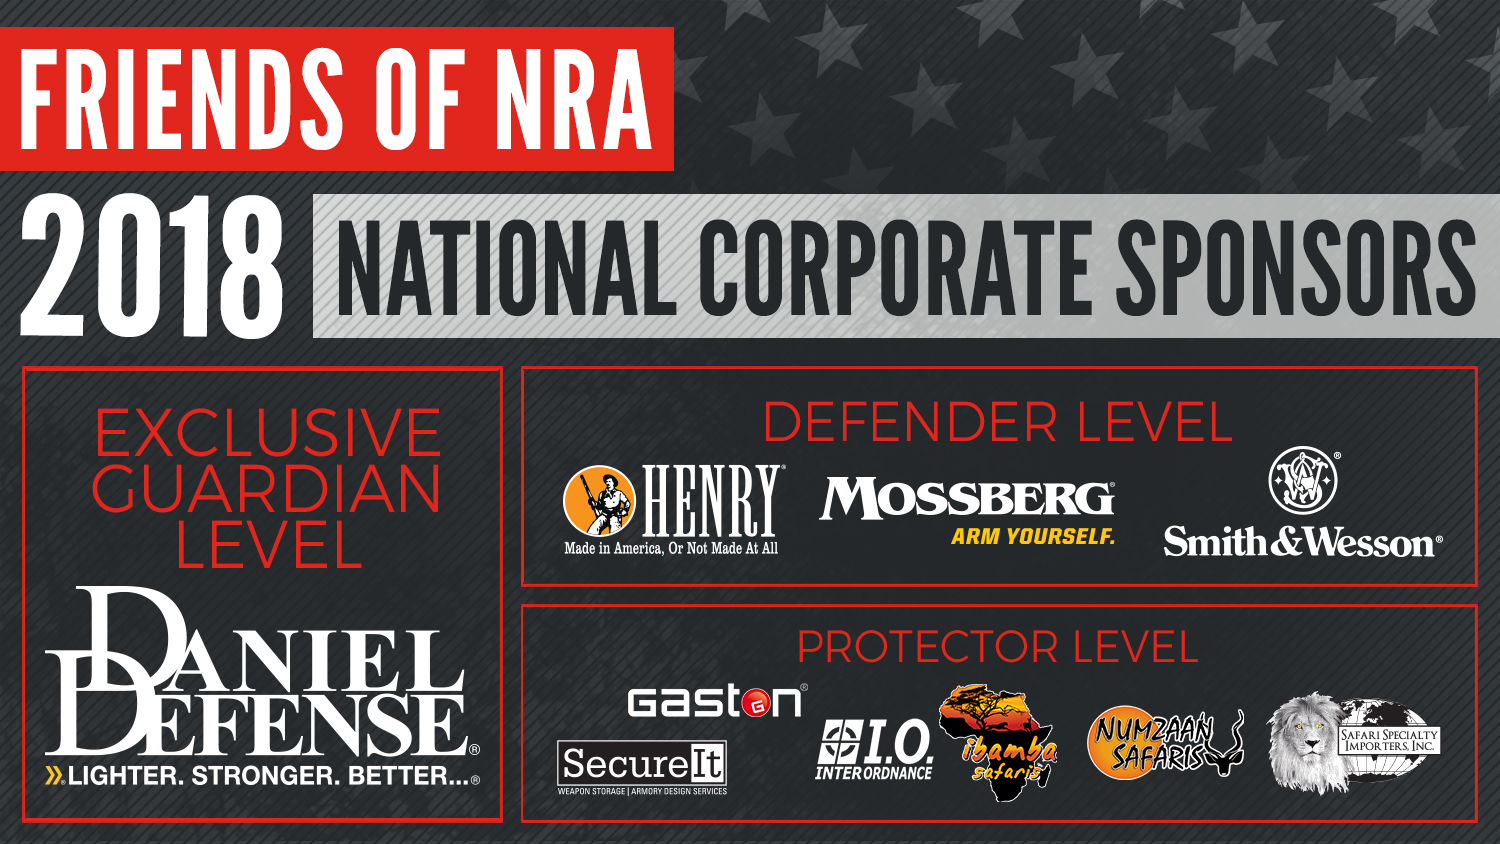 2018 Friends of NRA National Corporate Sponsor Program